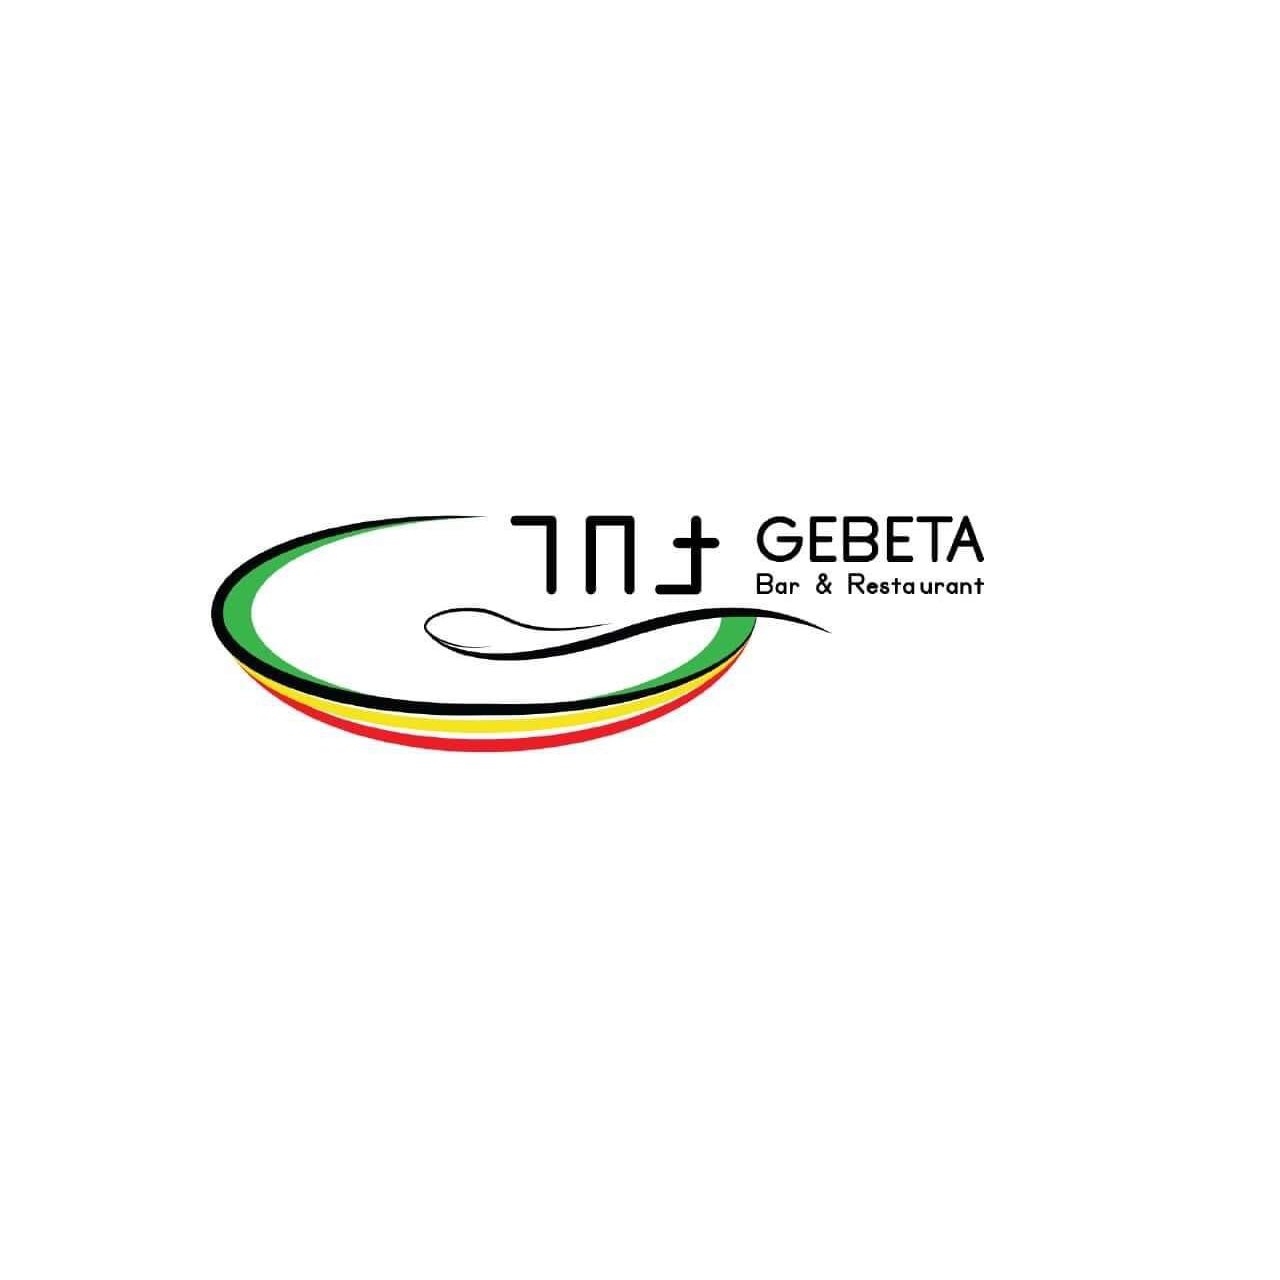 GEBETA Bar & Restaurant Logo